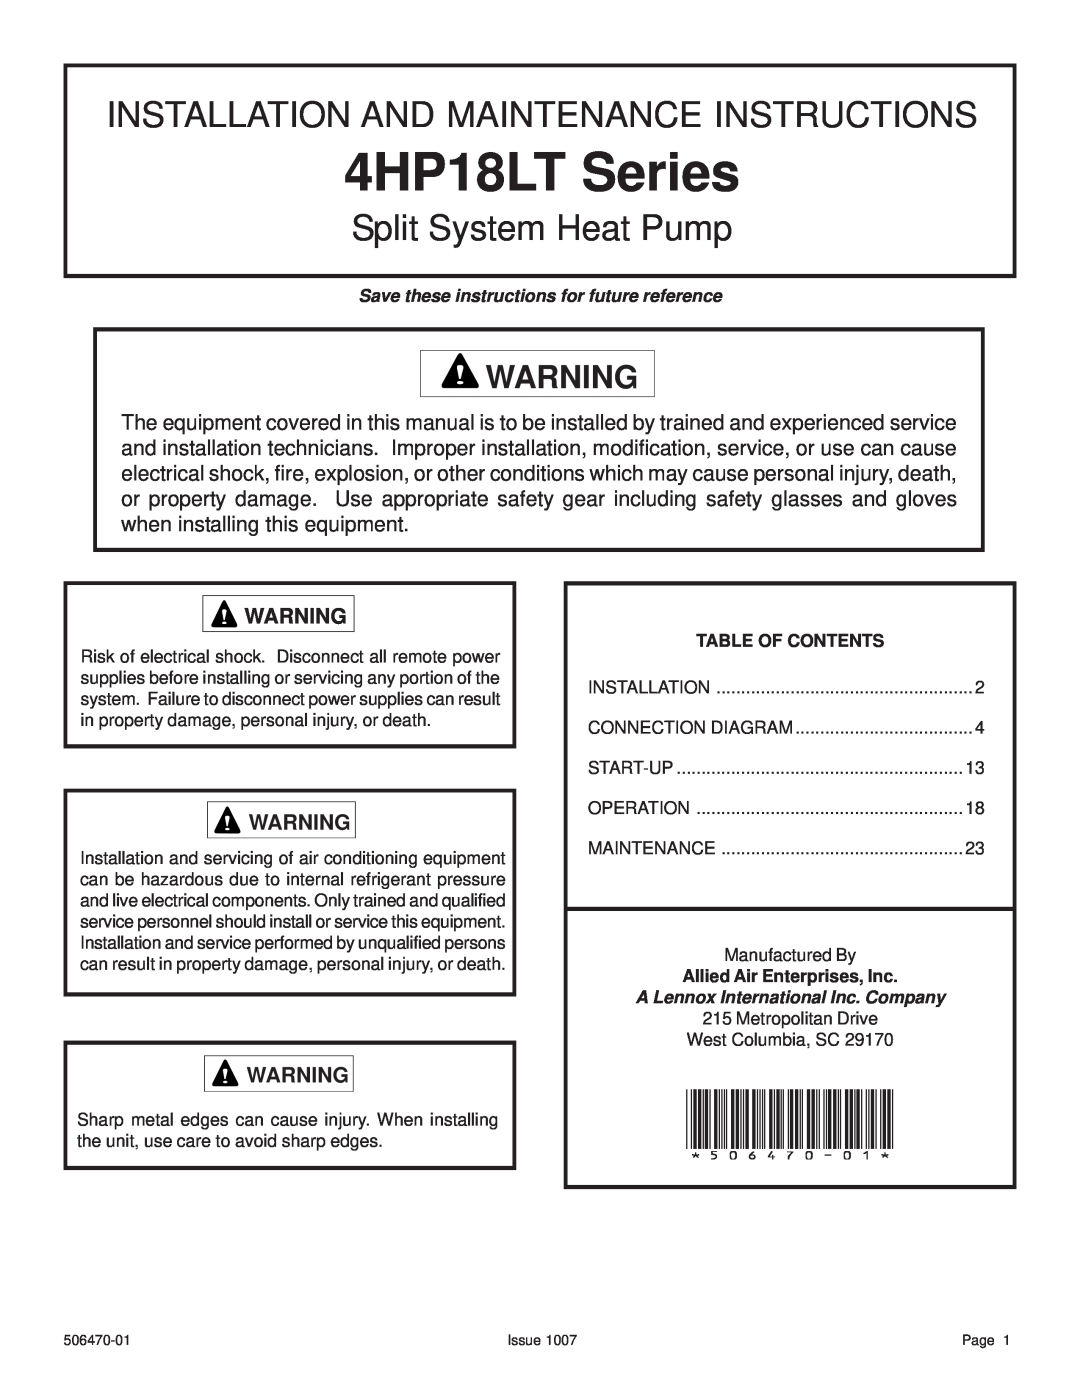 Lennox International Inc manual 4HP18LT Series, Installation And Maintenance Instructions, Split System Heat Pump, Page 